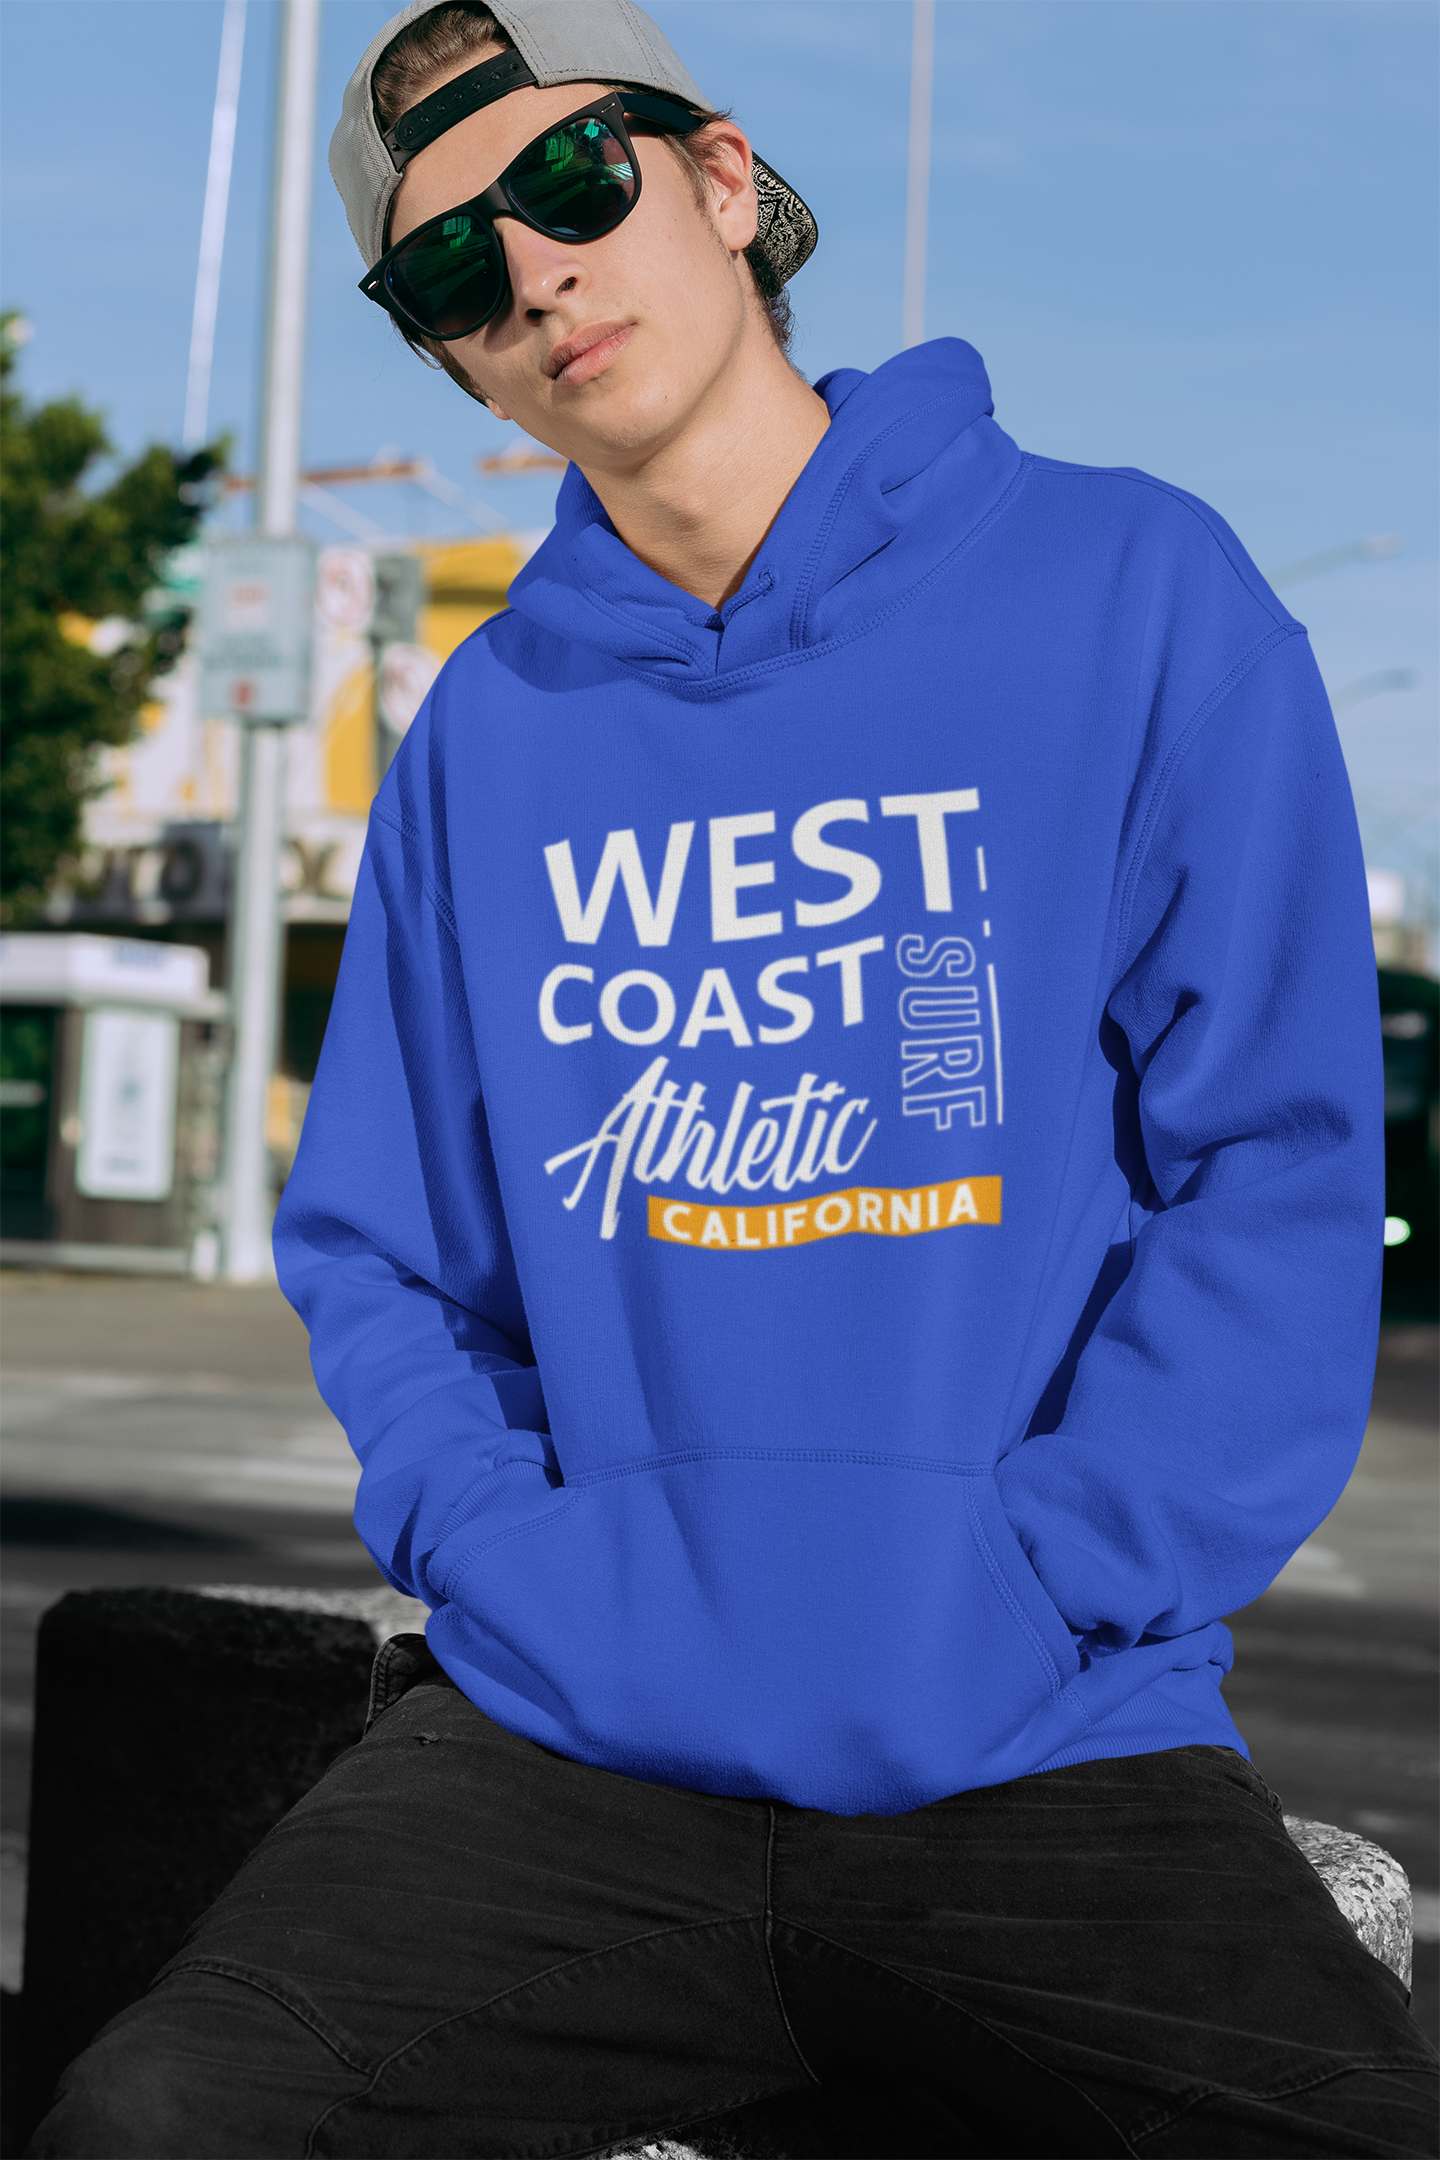 Stylish Blue Hoodies for Men West Coast Athletic Activewear Athleisure blue